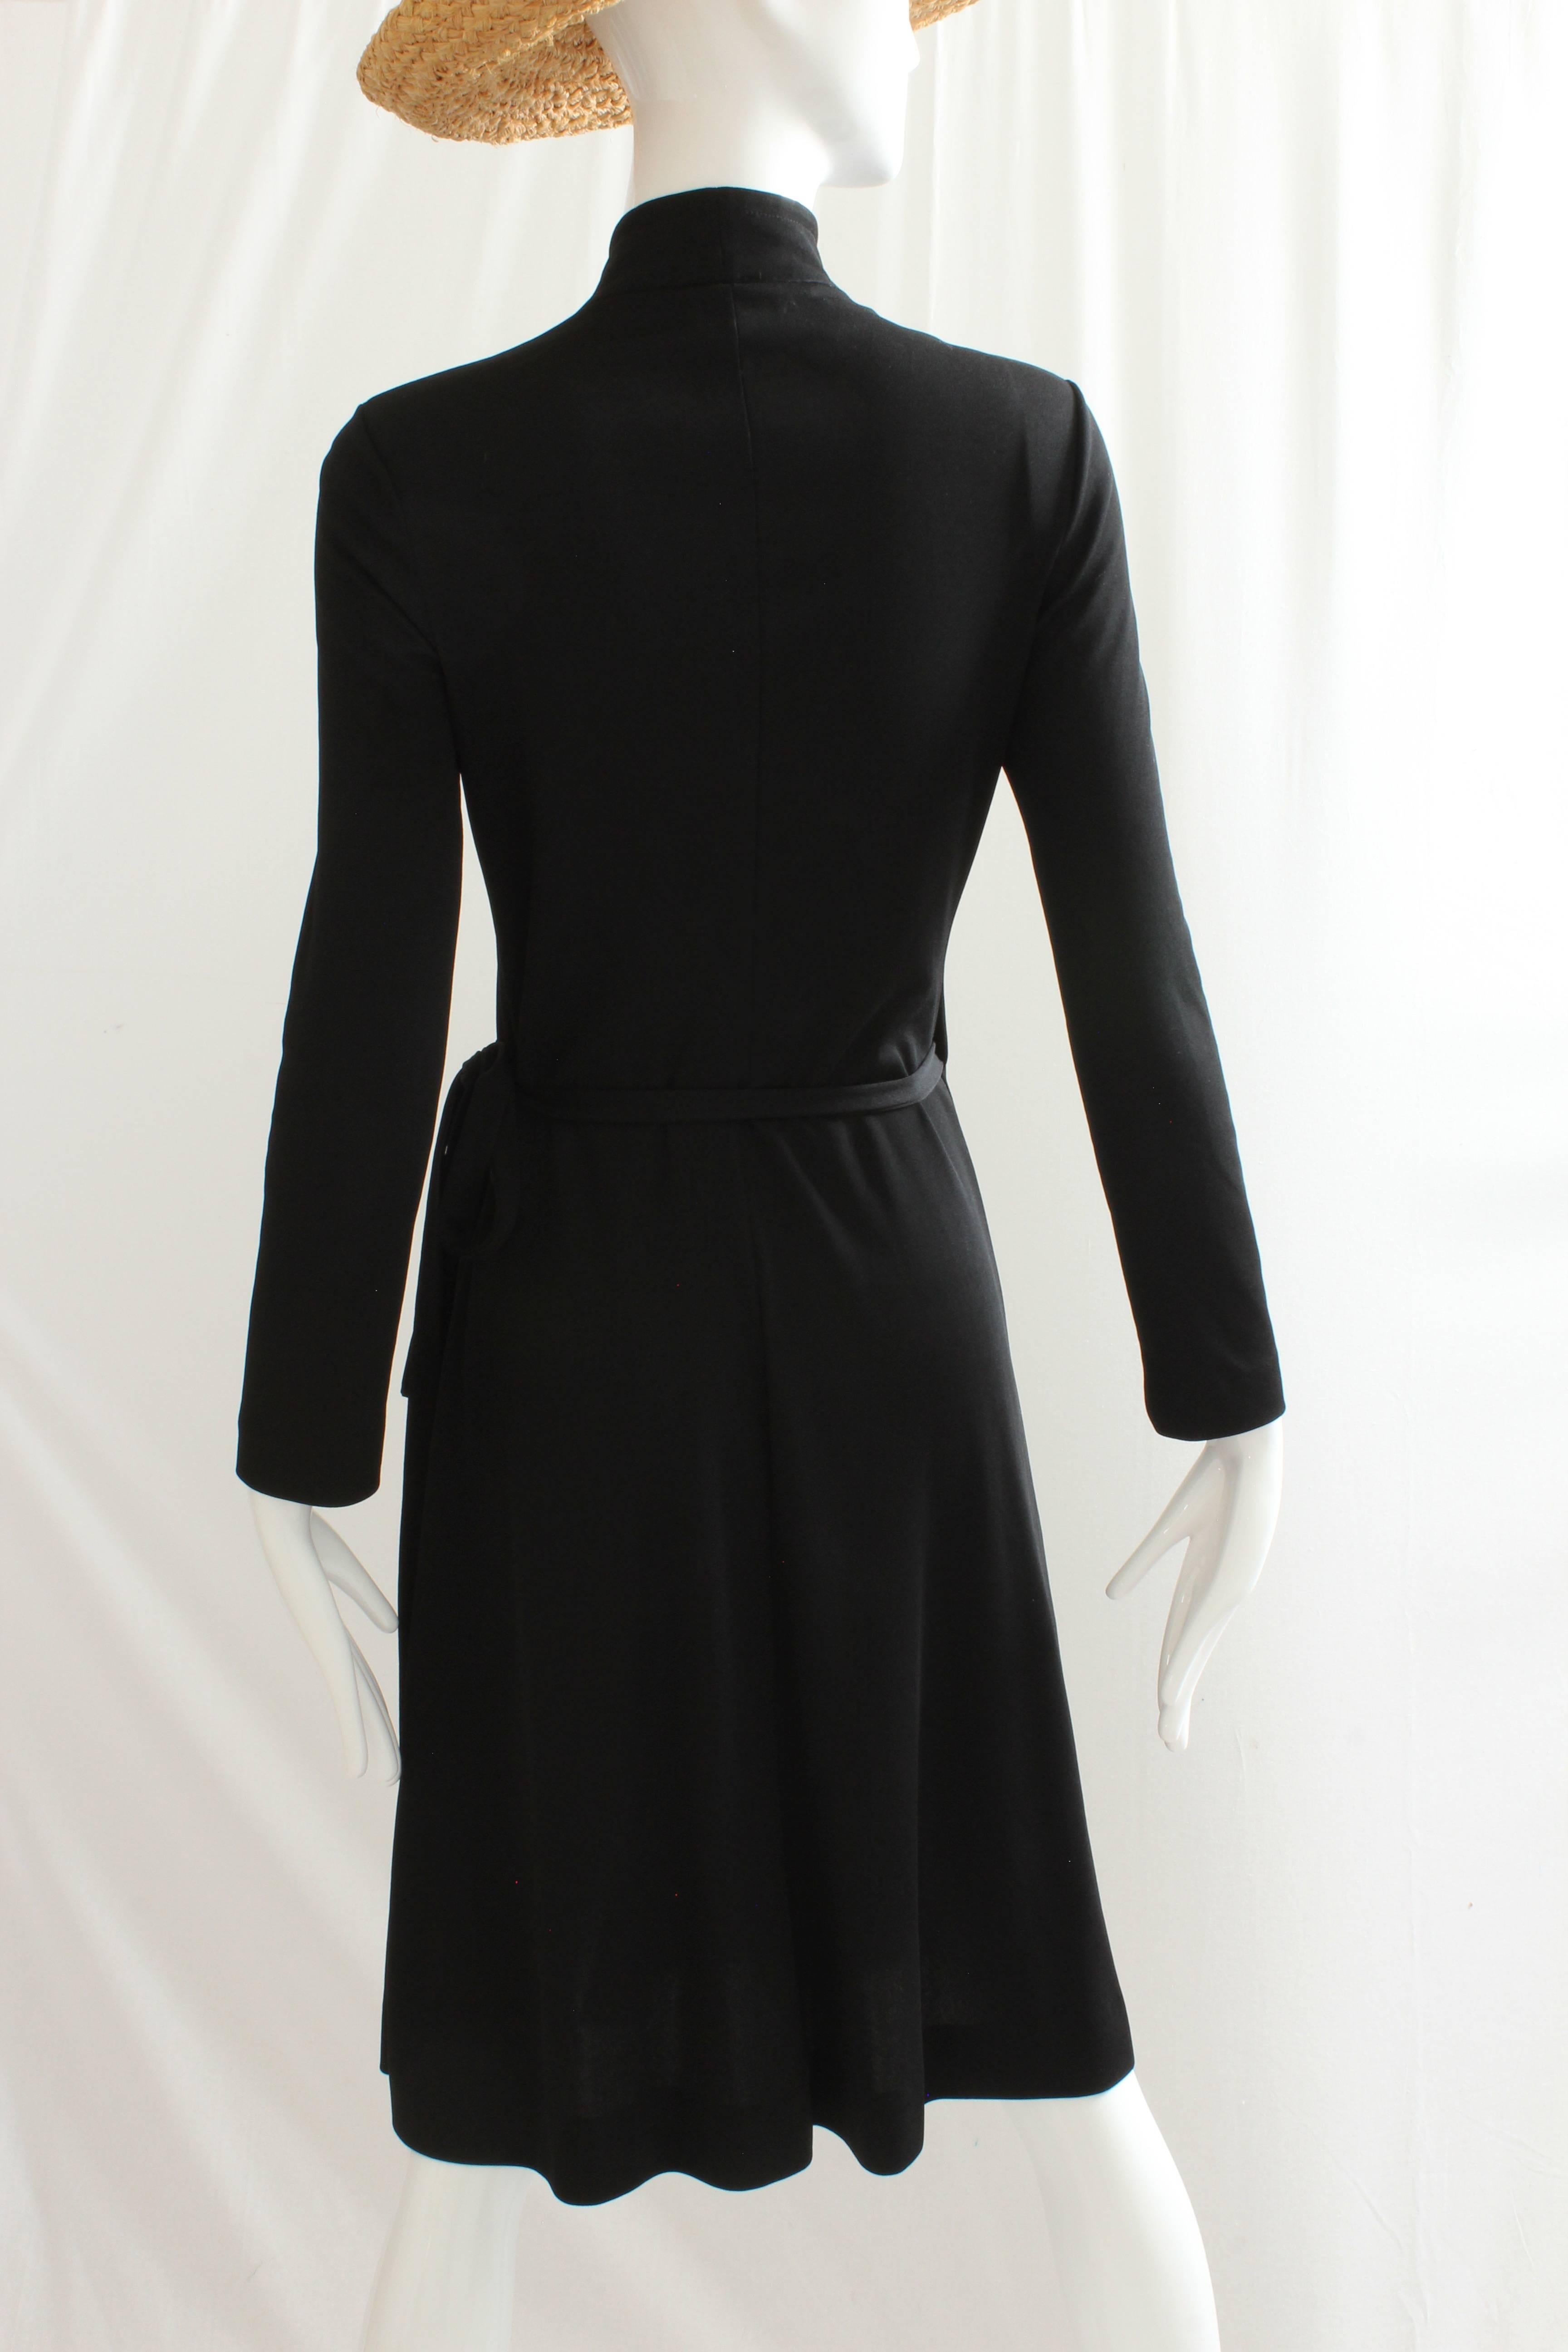 Women's 70s Clovis Ruffin Black Jersey Wrap Dress with Swan Neck Collar Vintage Sz 7/8 